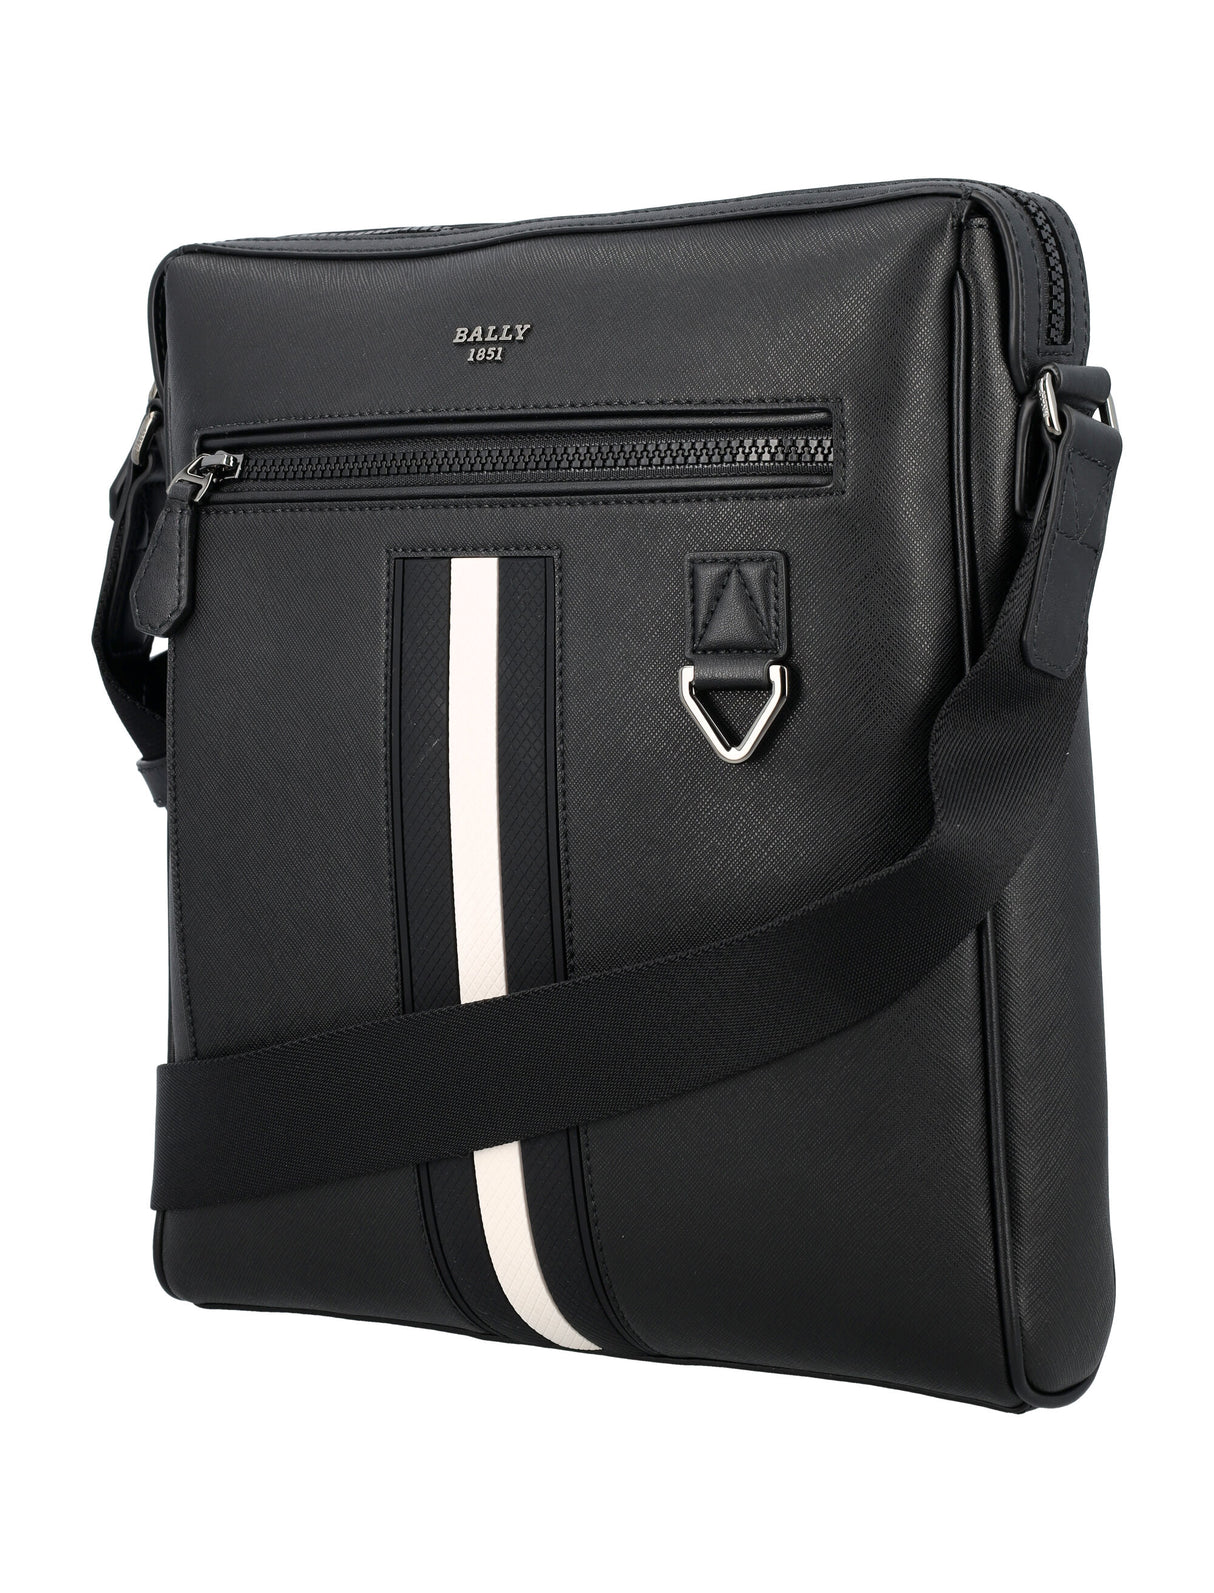 Men's Recycled Leather Handbag - Zip Fastening, Adjustable Strap, Bally Stripe Detail